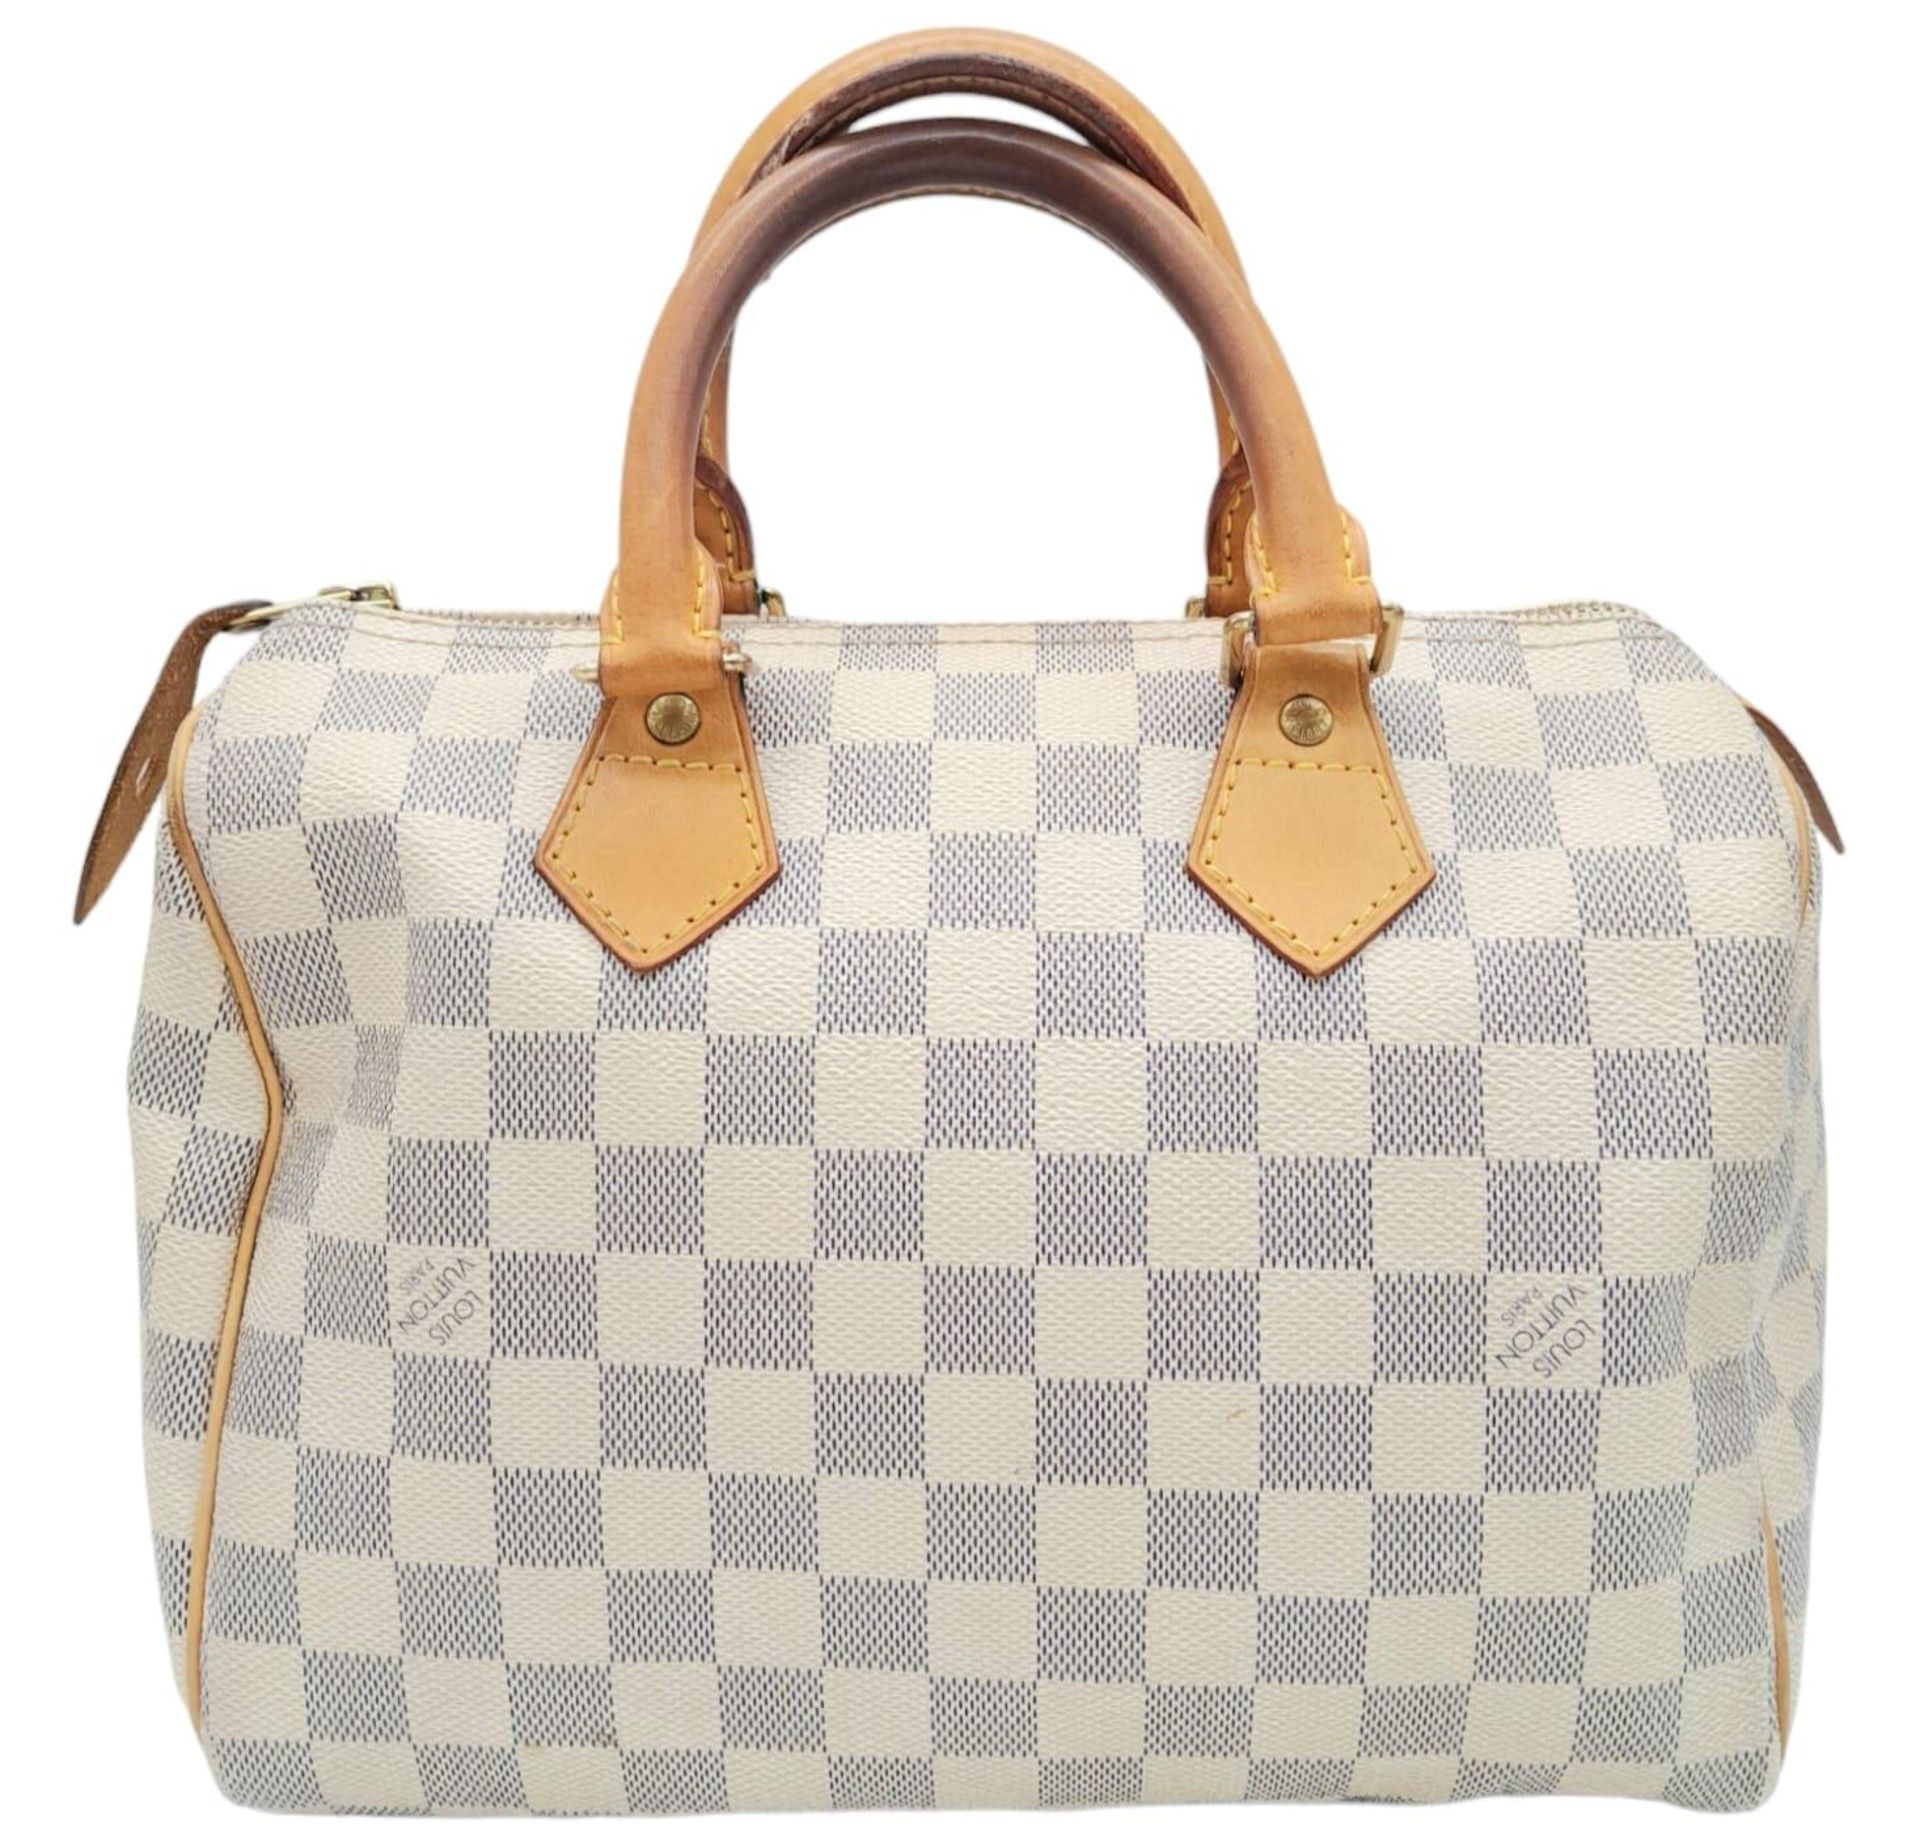 A Louis Vuitton White Canvas Damier Azur Speedy Handbag. Leather exterior, Rolled leather handles, a